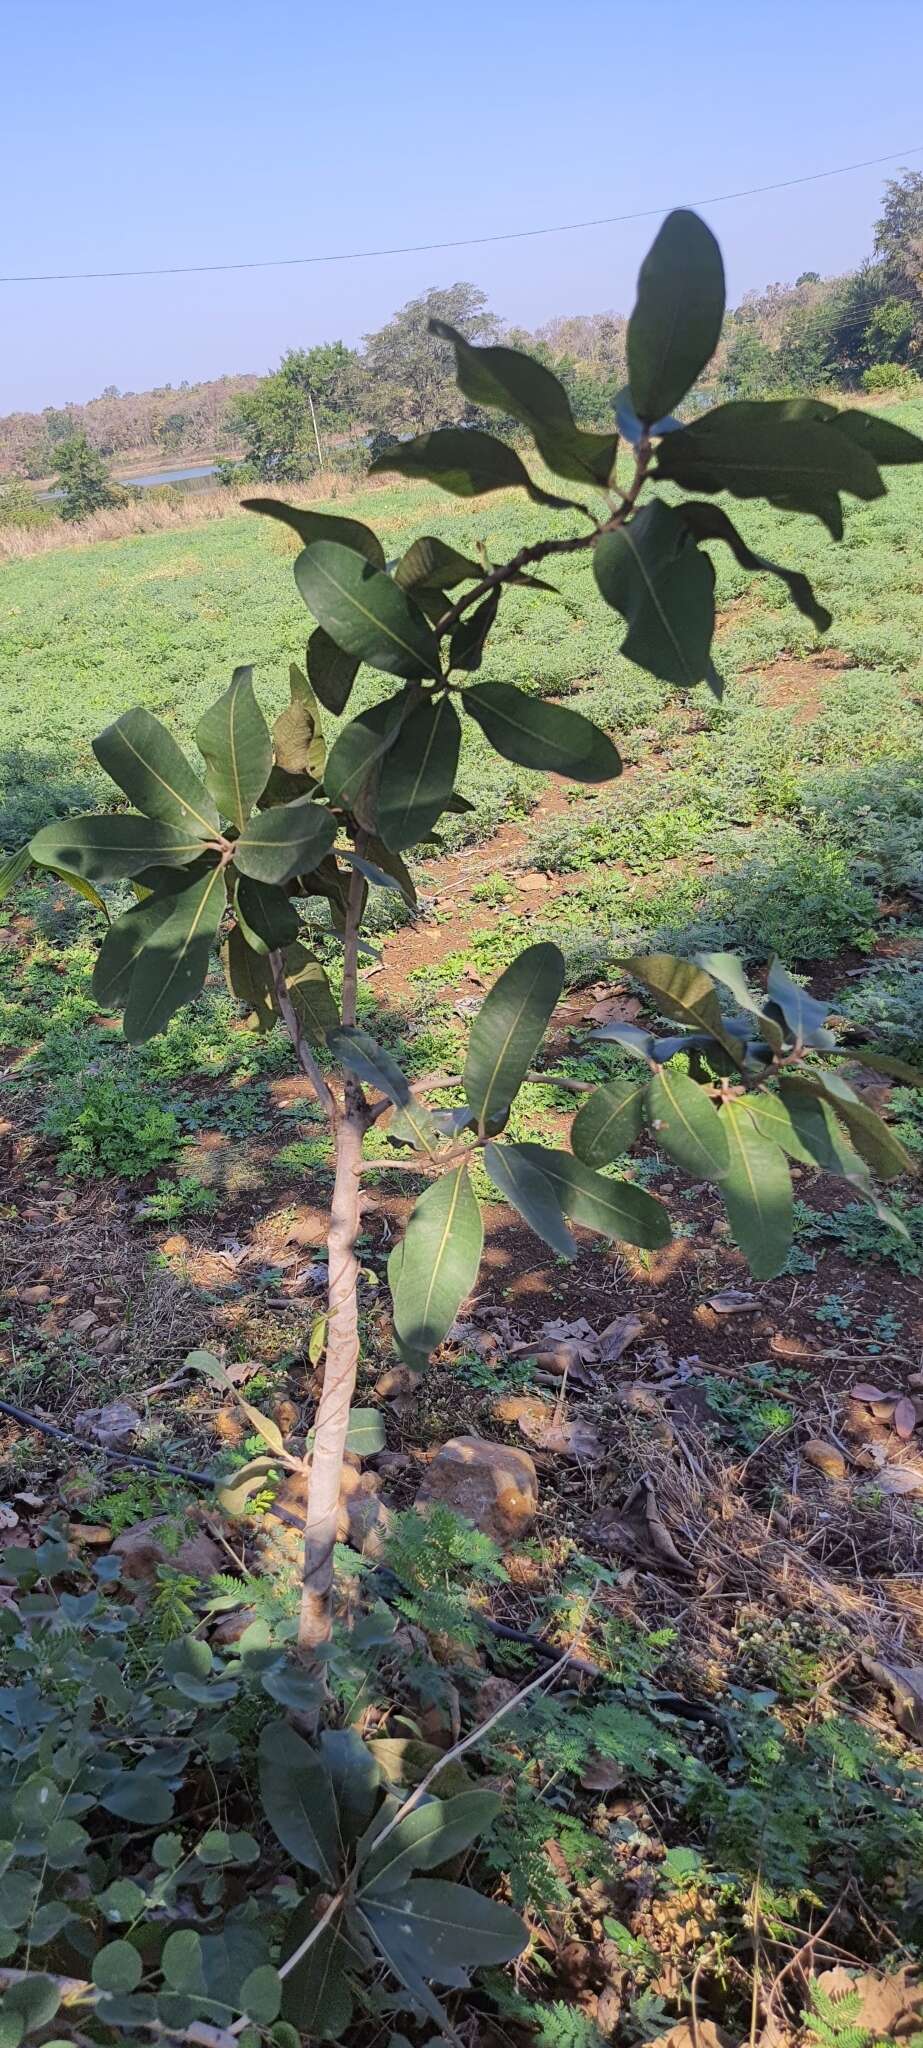 Image of Lanzan tree